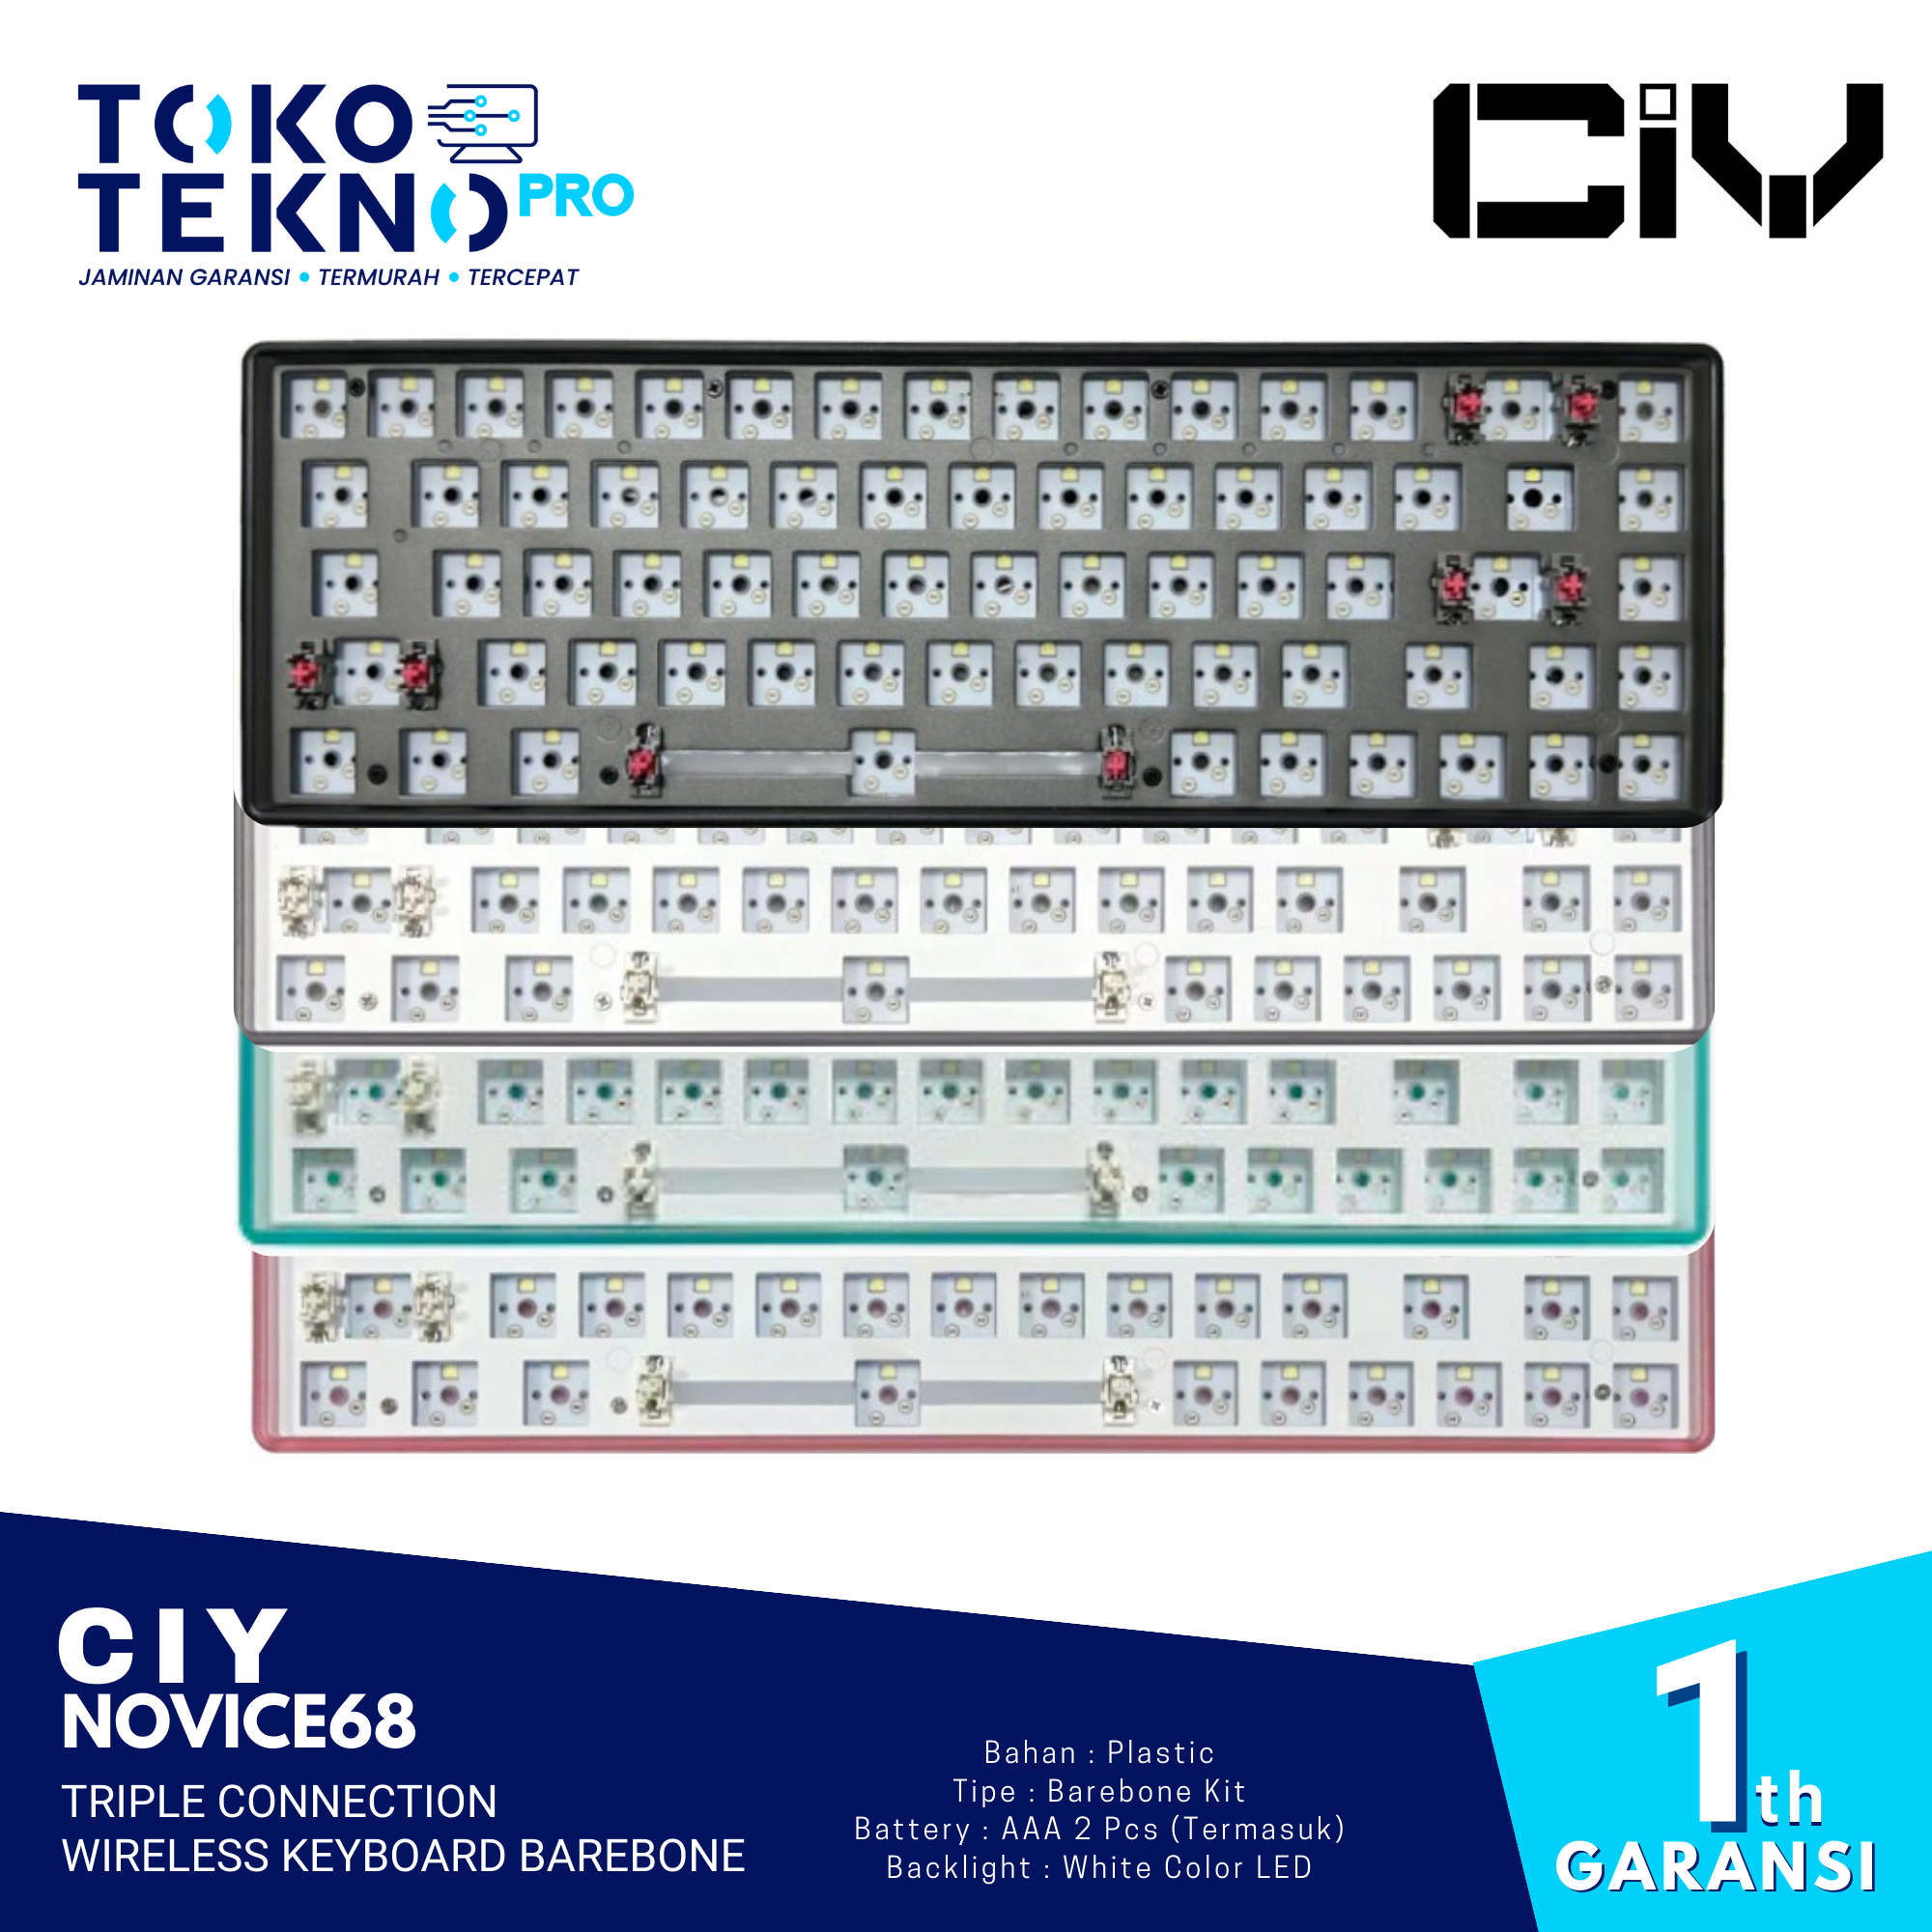 CIY Novice 68 Triple Connection Wireless Keyboard Barebone